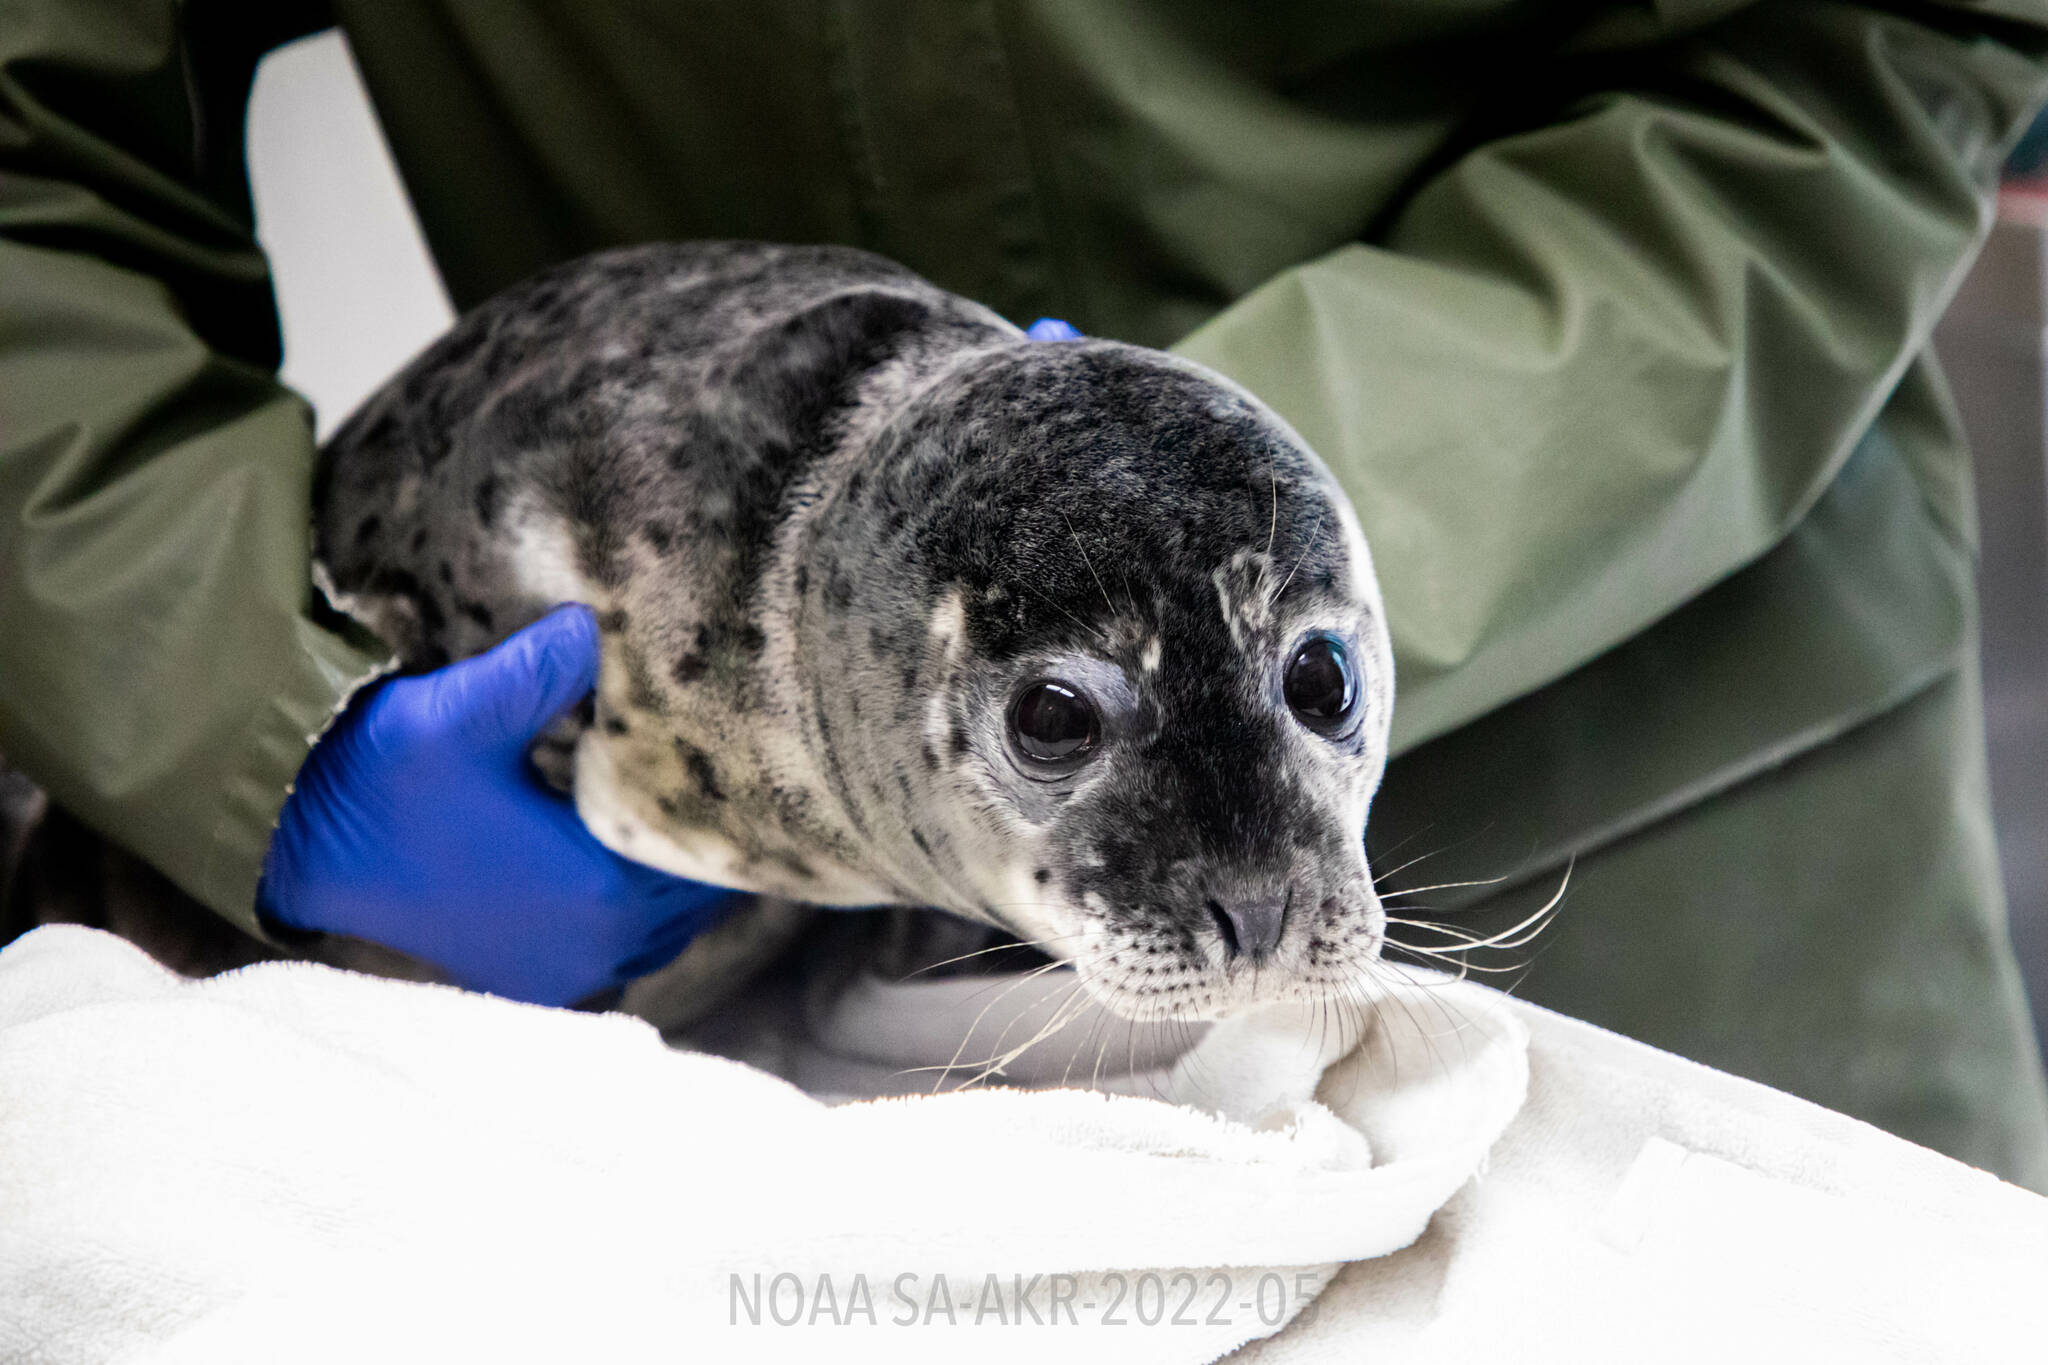 Alaska SeaLife Center staff treat a harbor seal pup at the Alaska SeaLife Center in Seward. (Photo courtesy Kaiti Grant/Alaska SeaLife Center)